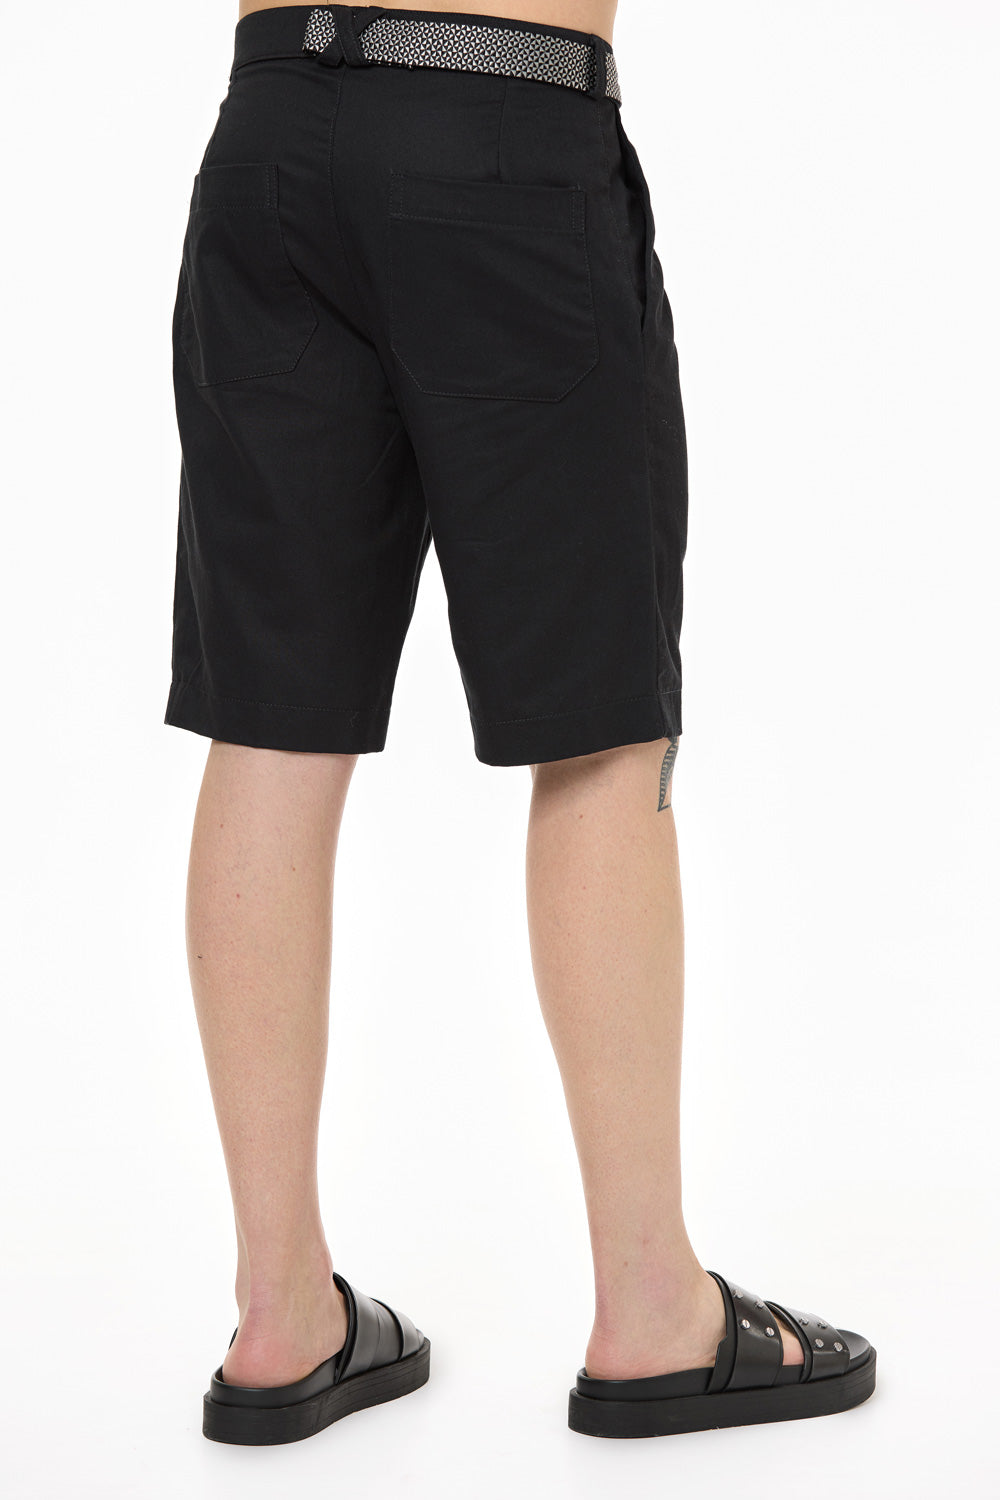 Cairo linen black shorts